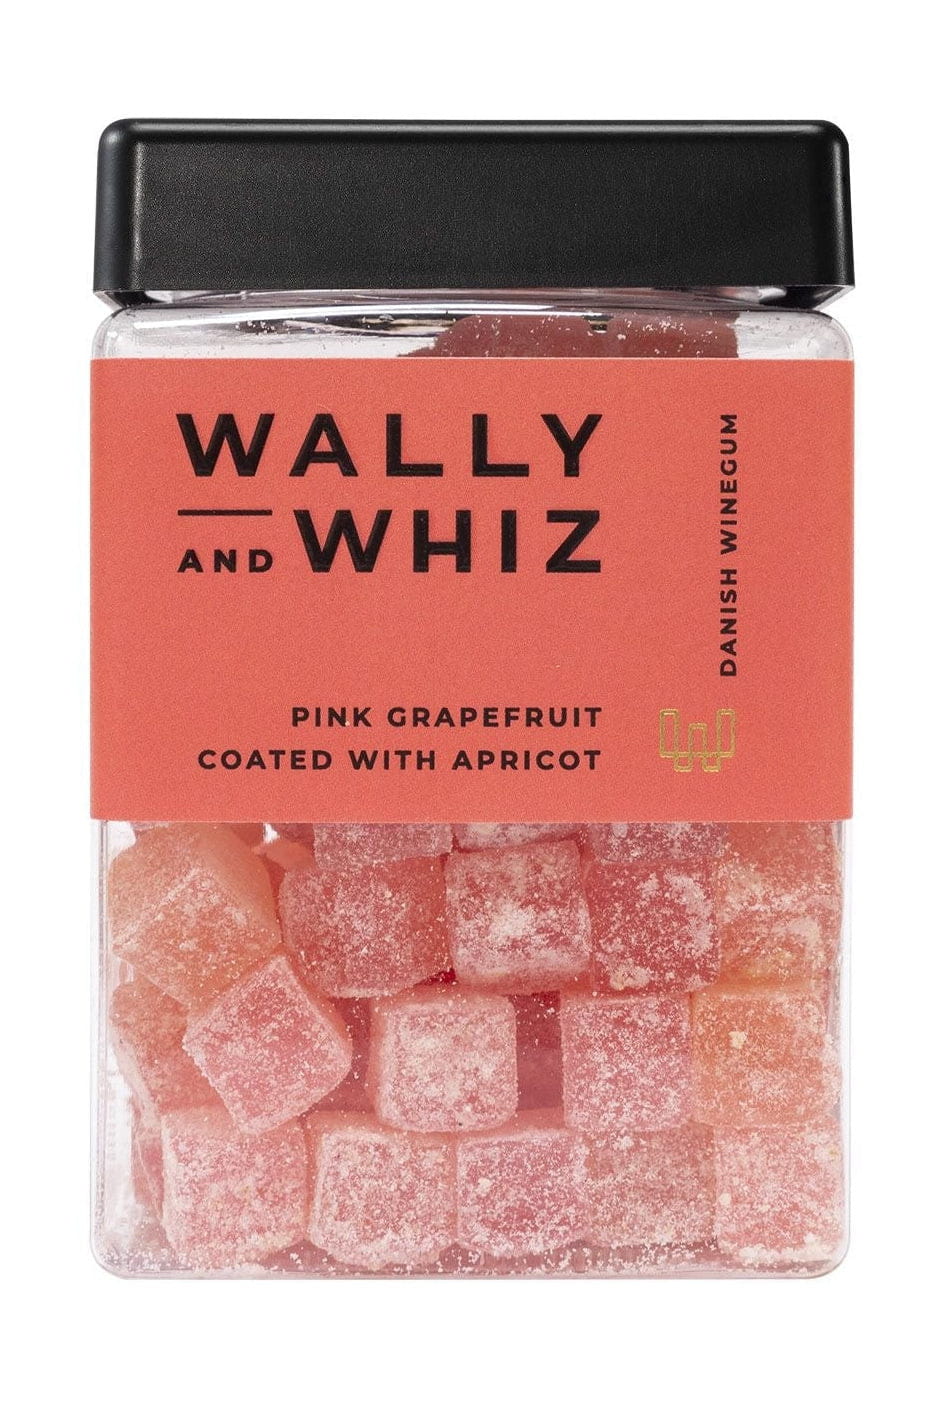 Wally a Whiz Wine Gum Cube, růžový grapefruit s meruňkami, 240G